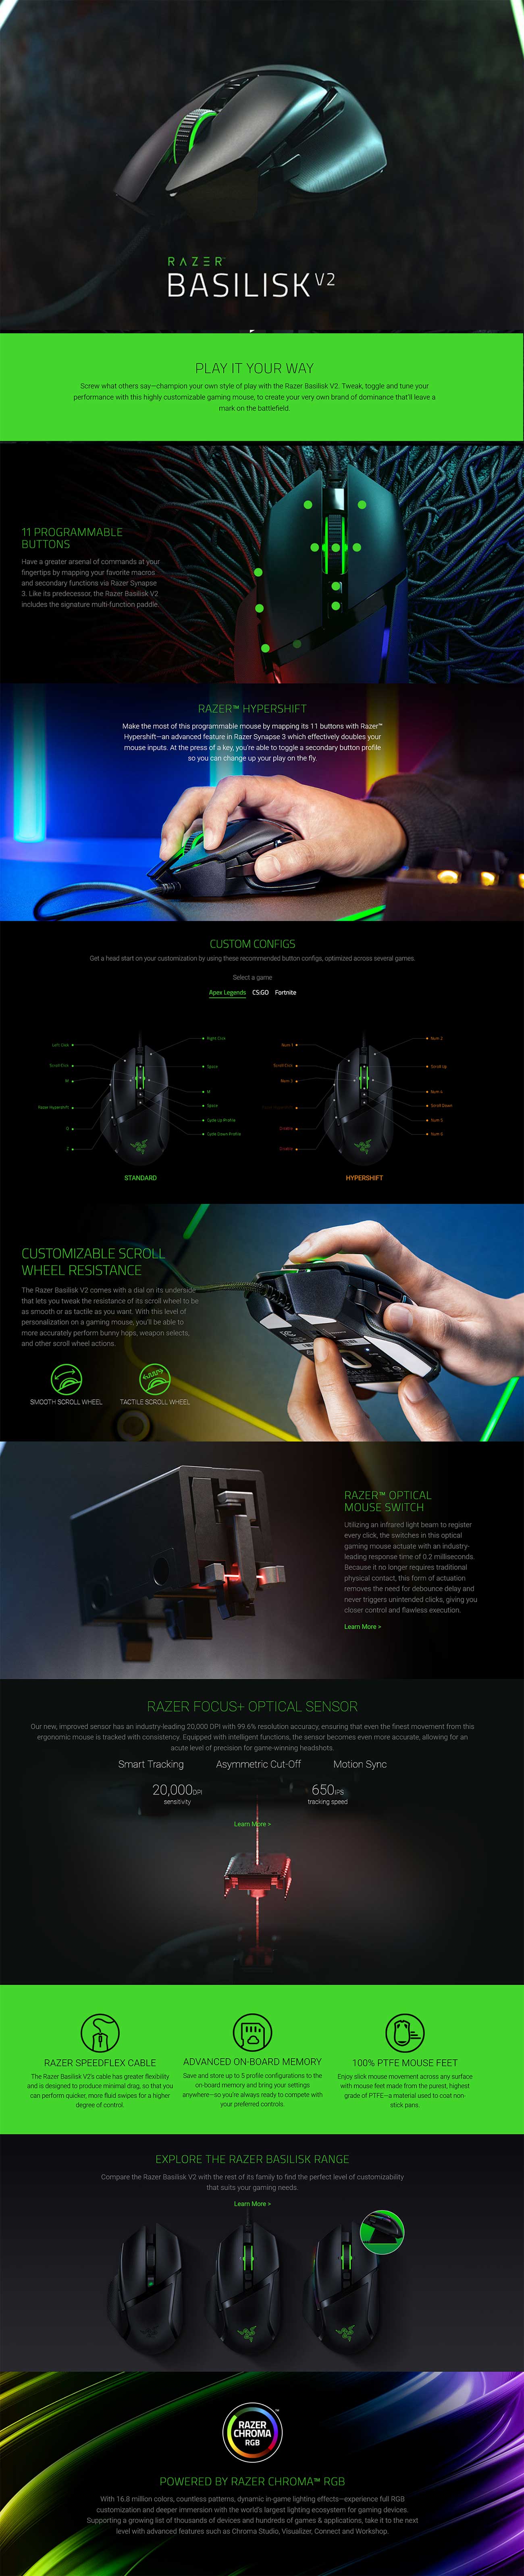 Razer Basilisk V2 - Ergonomic Gaming Mouse Details